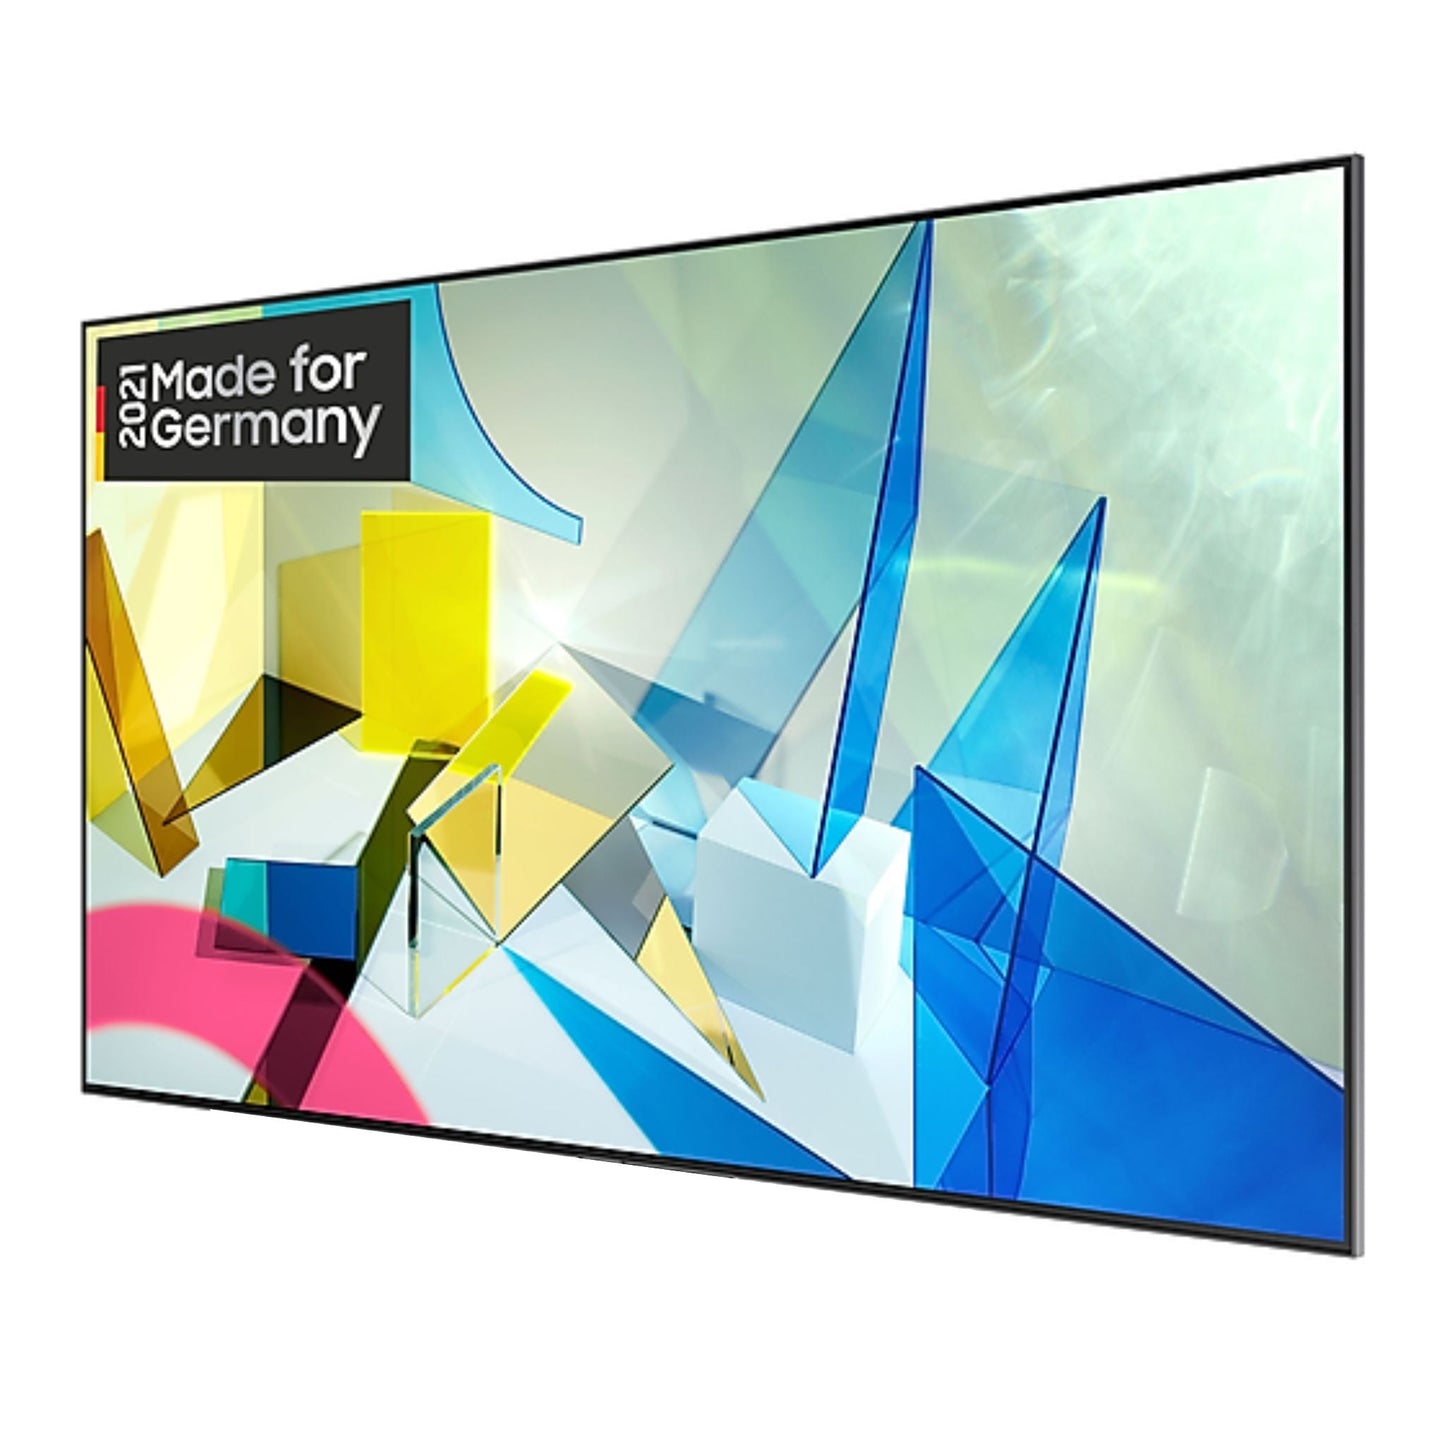 Samsung 55 inch Smart QLED TV, 55Q80T